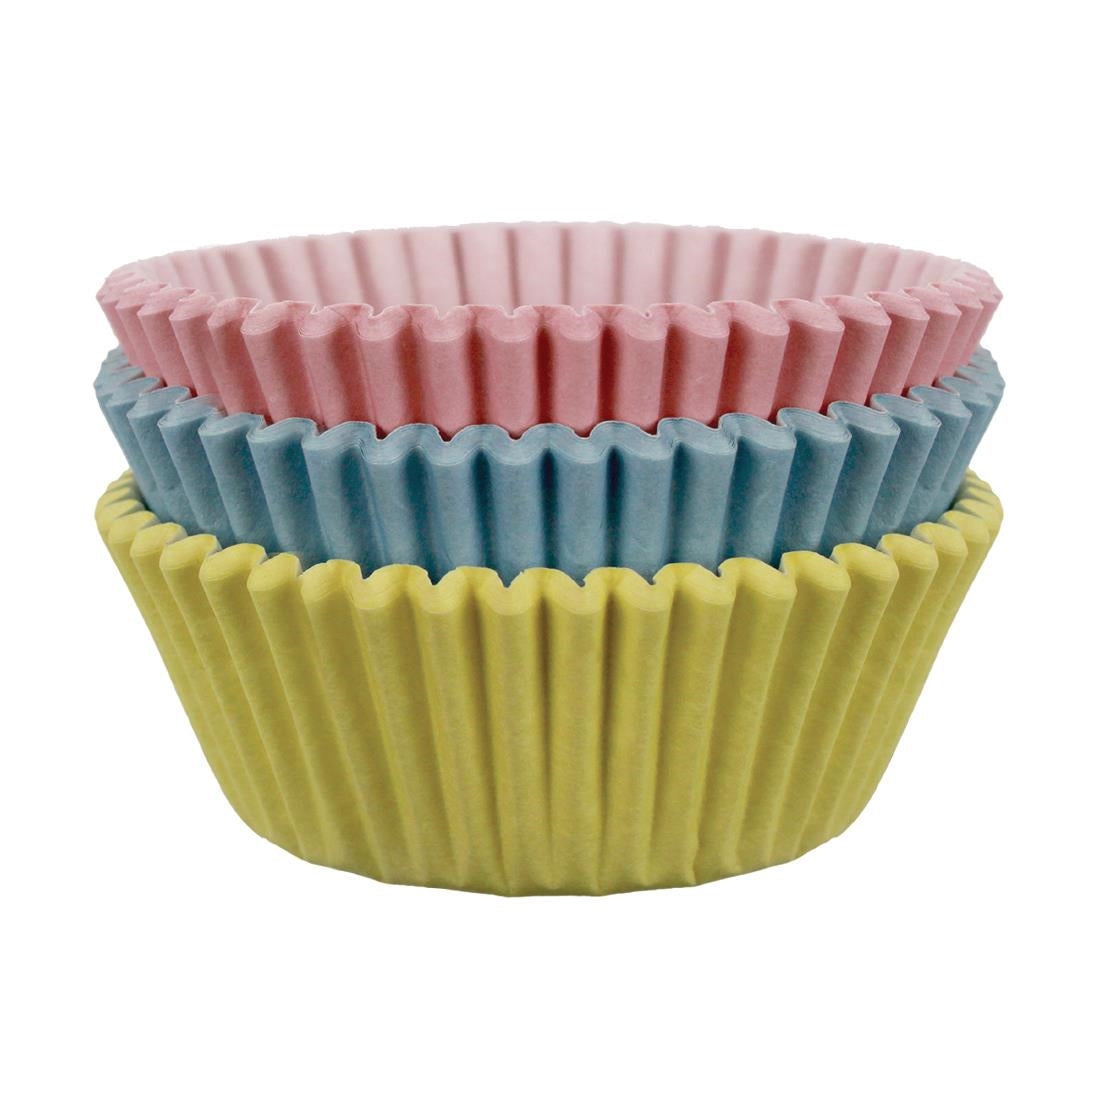 GE847 PME Cupcake Baking Cases Pastel (Pack of 60)